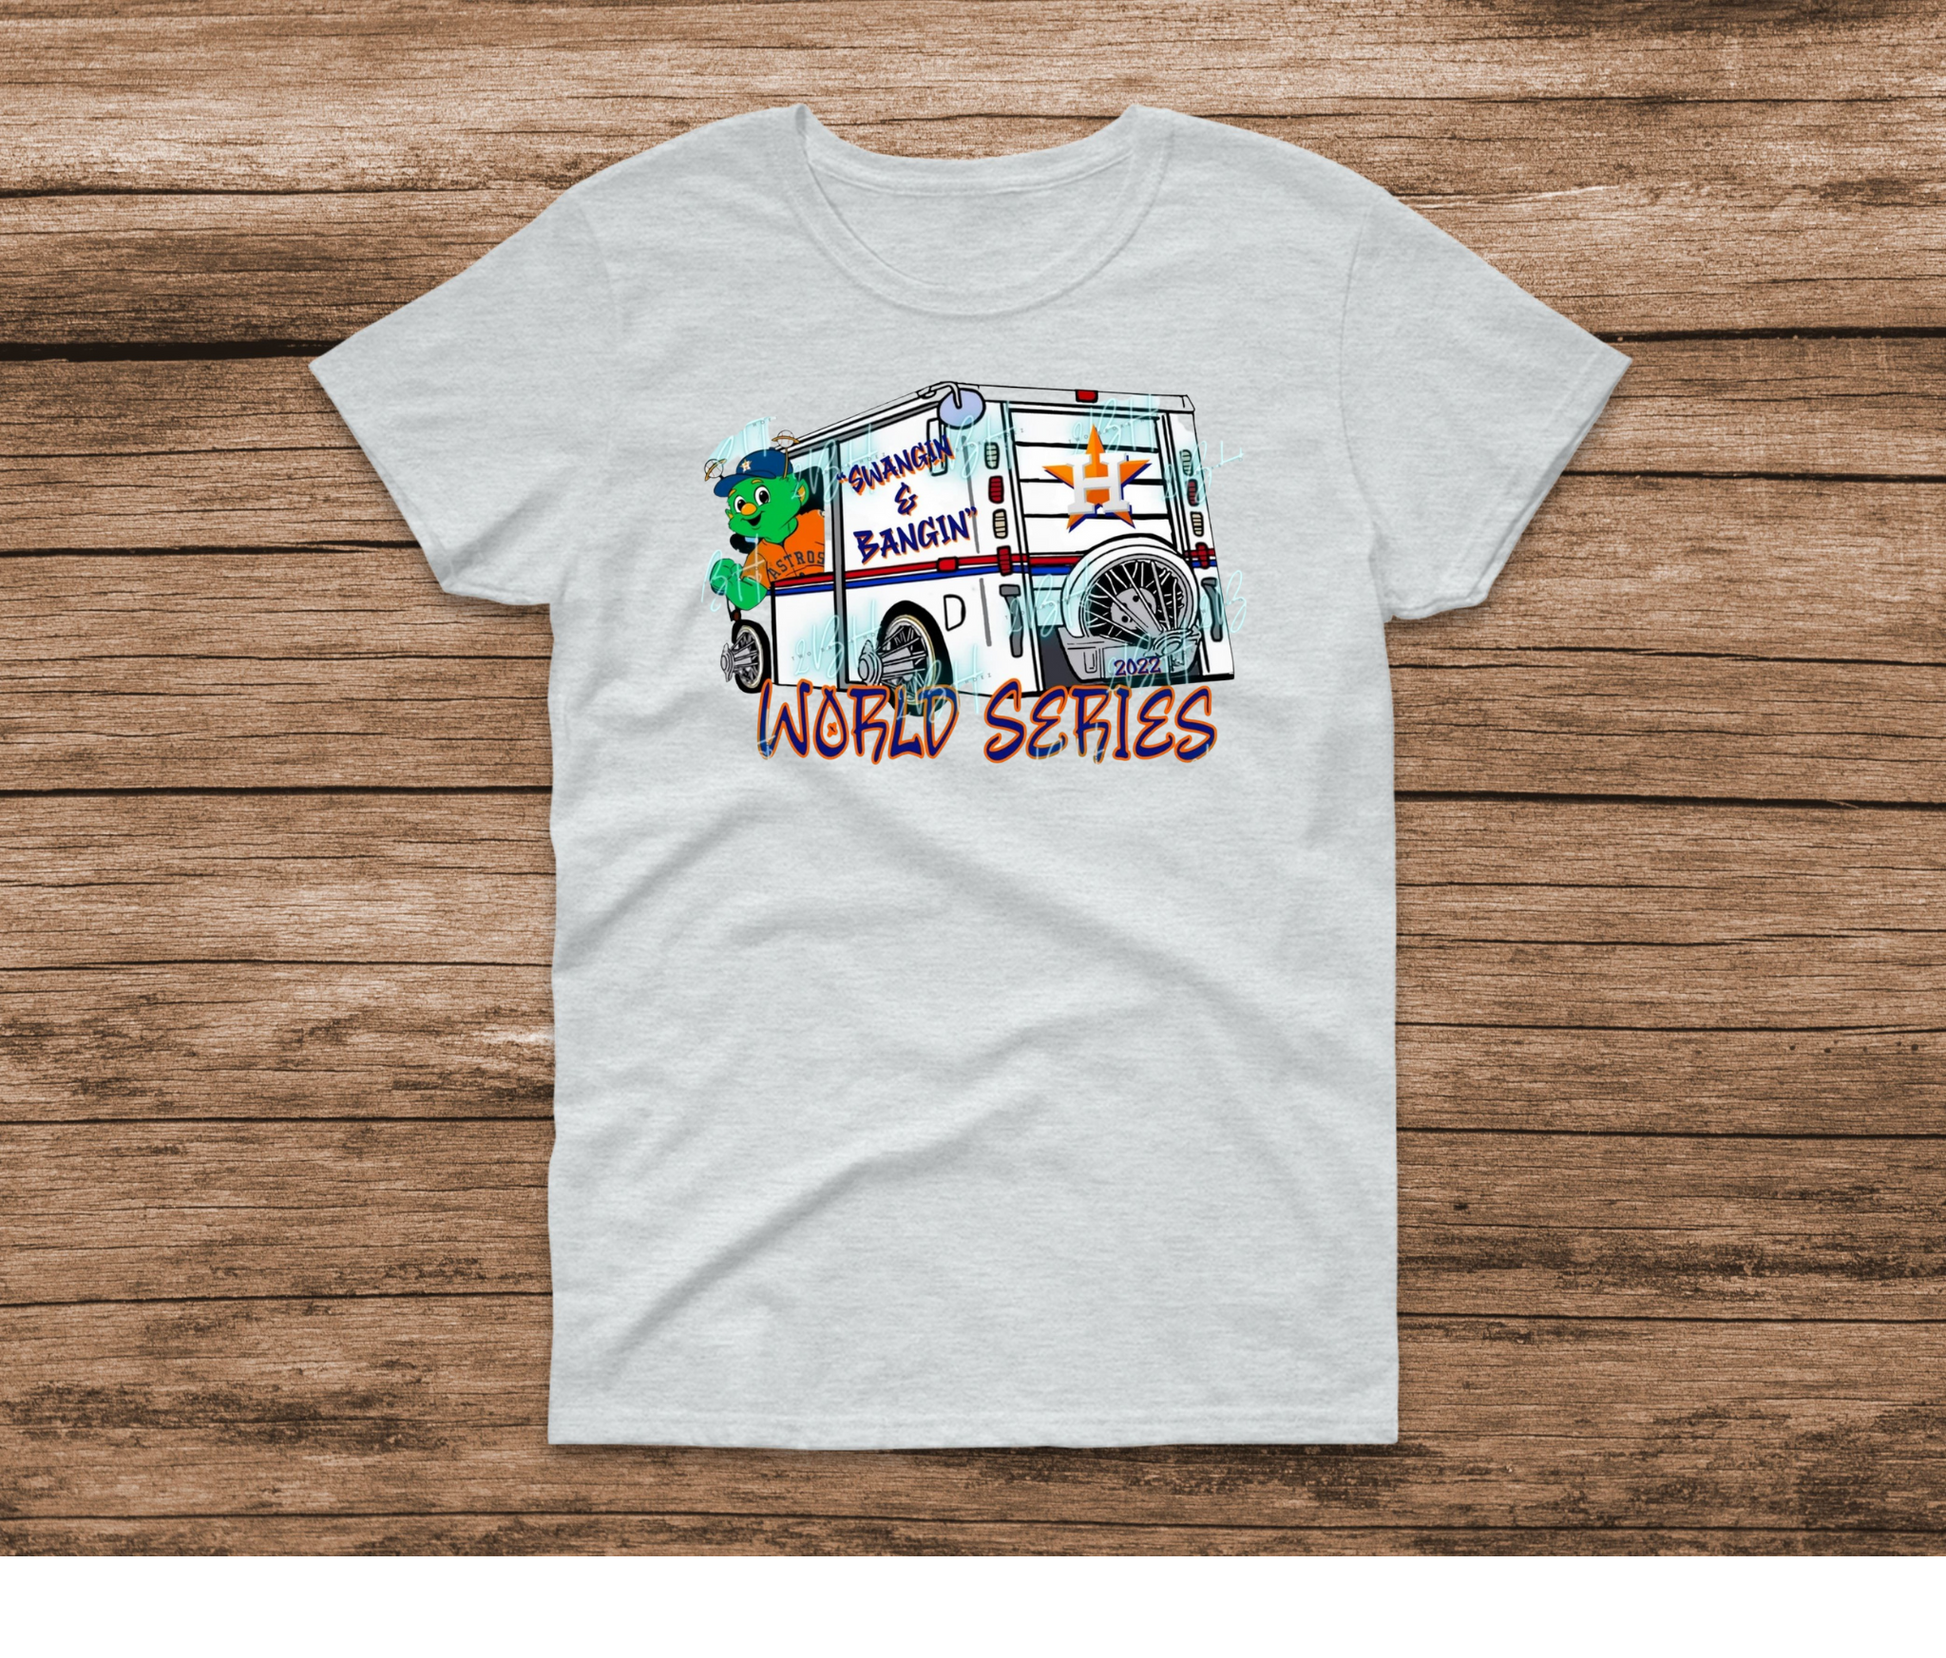 Cheap Astros Shirts - Bing - Shopping